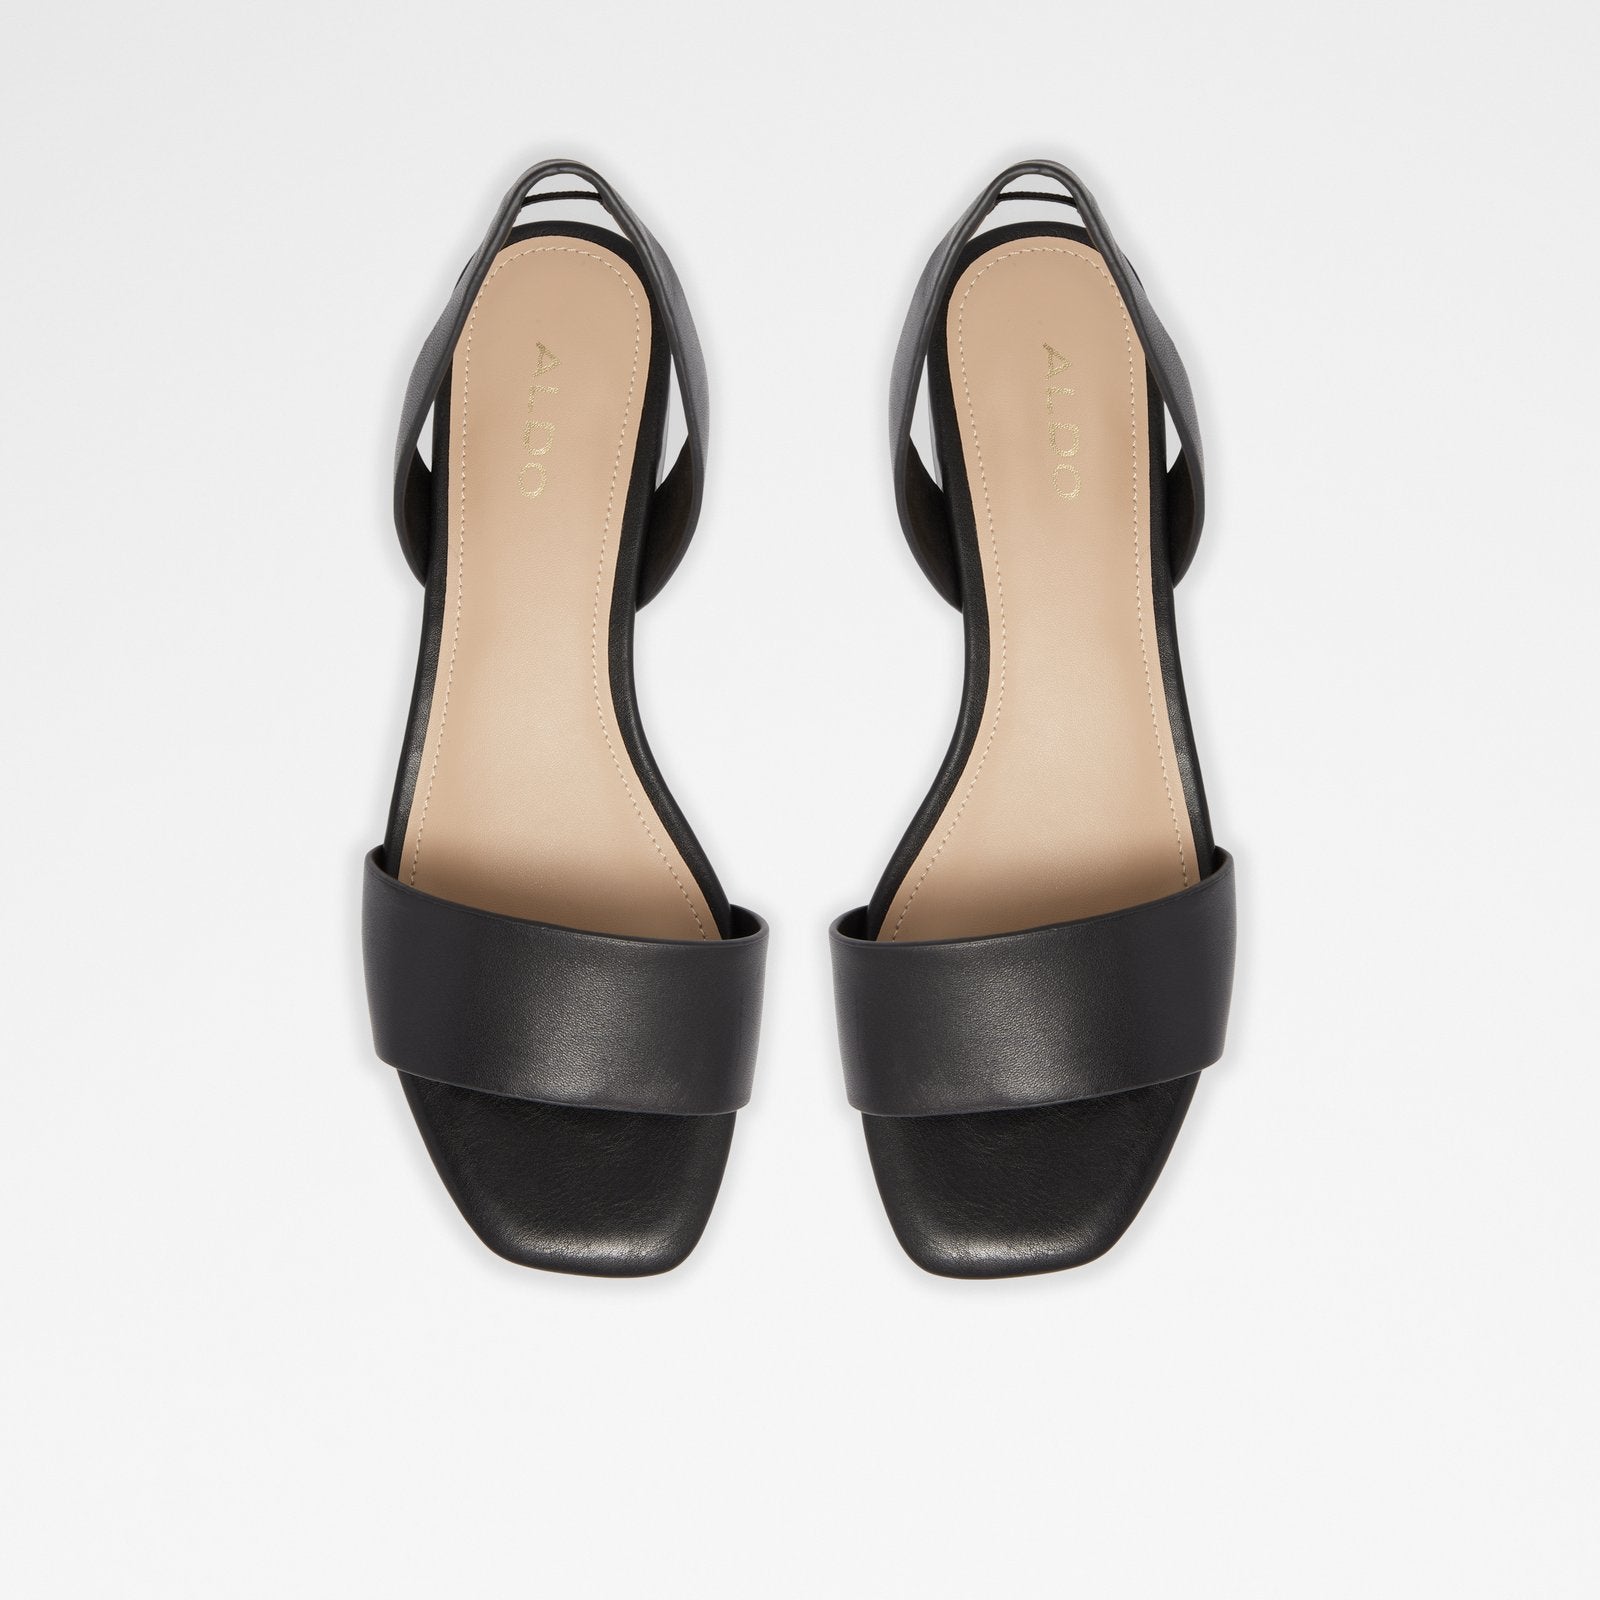 Doredda Women Shoes - Black - ALDO KSA